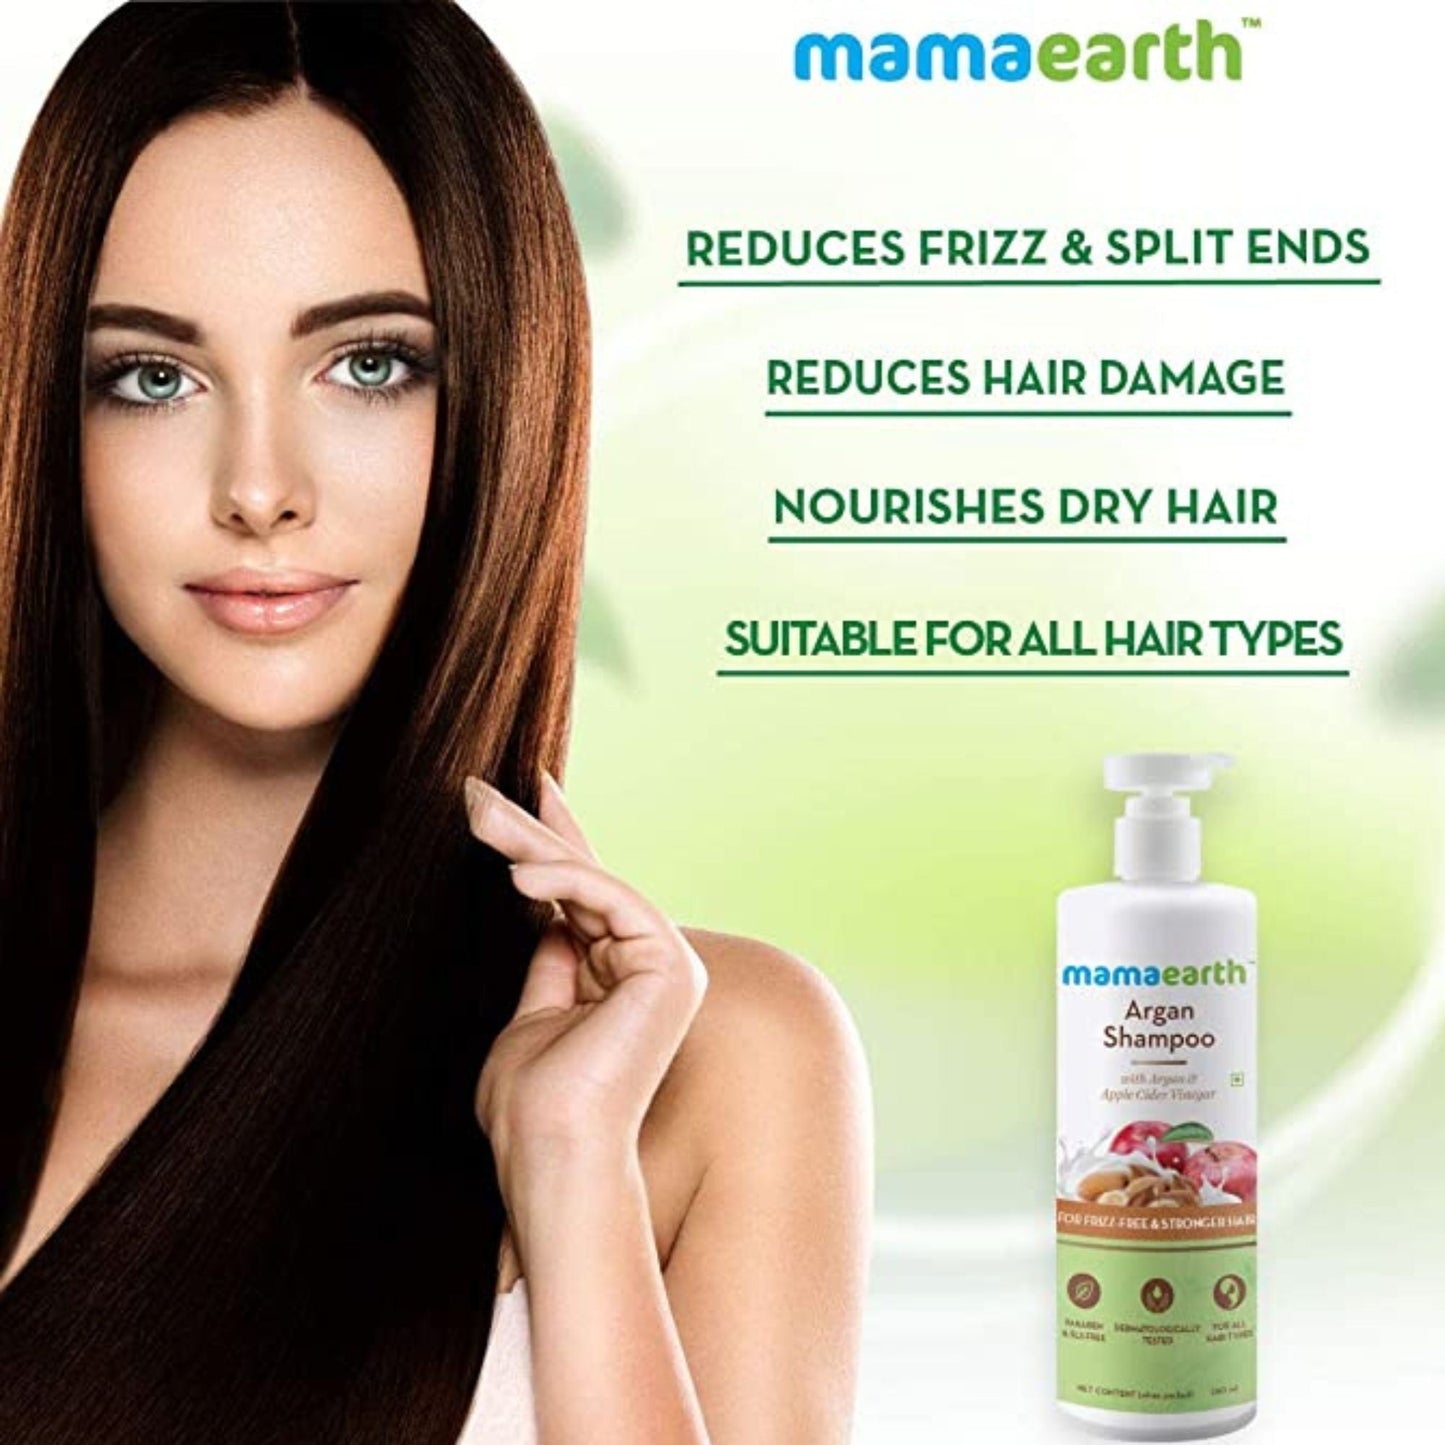 Mamaearth Argan & Apple Cider Vinegar Shampoo For Dry & Frizzy Hair, with Argan & Apple Cider Vinegar for Frizz-Free & Stronger Hair